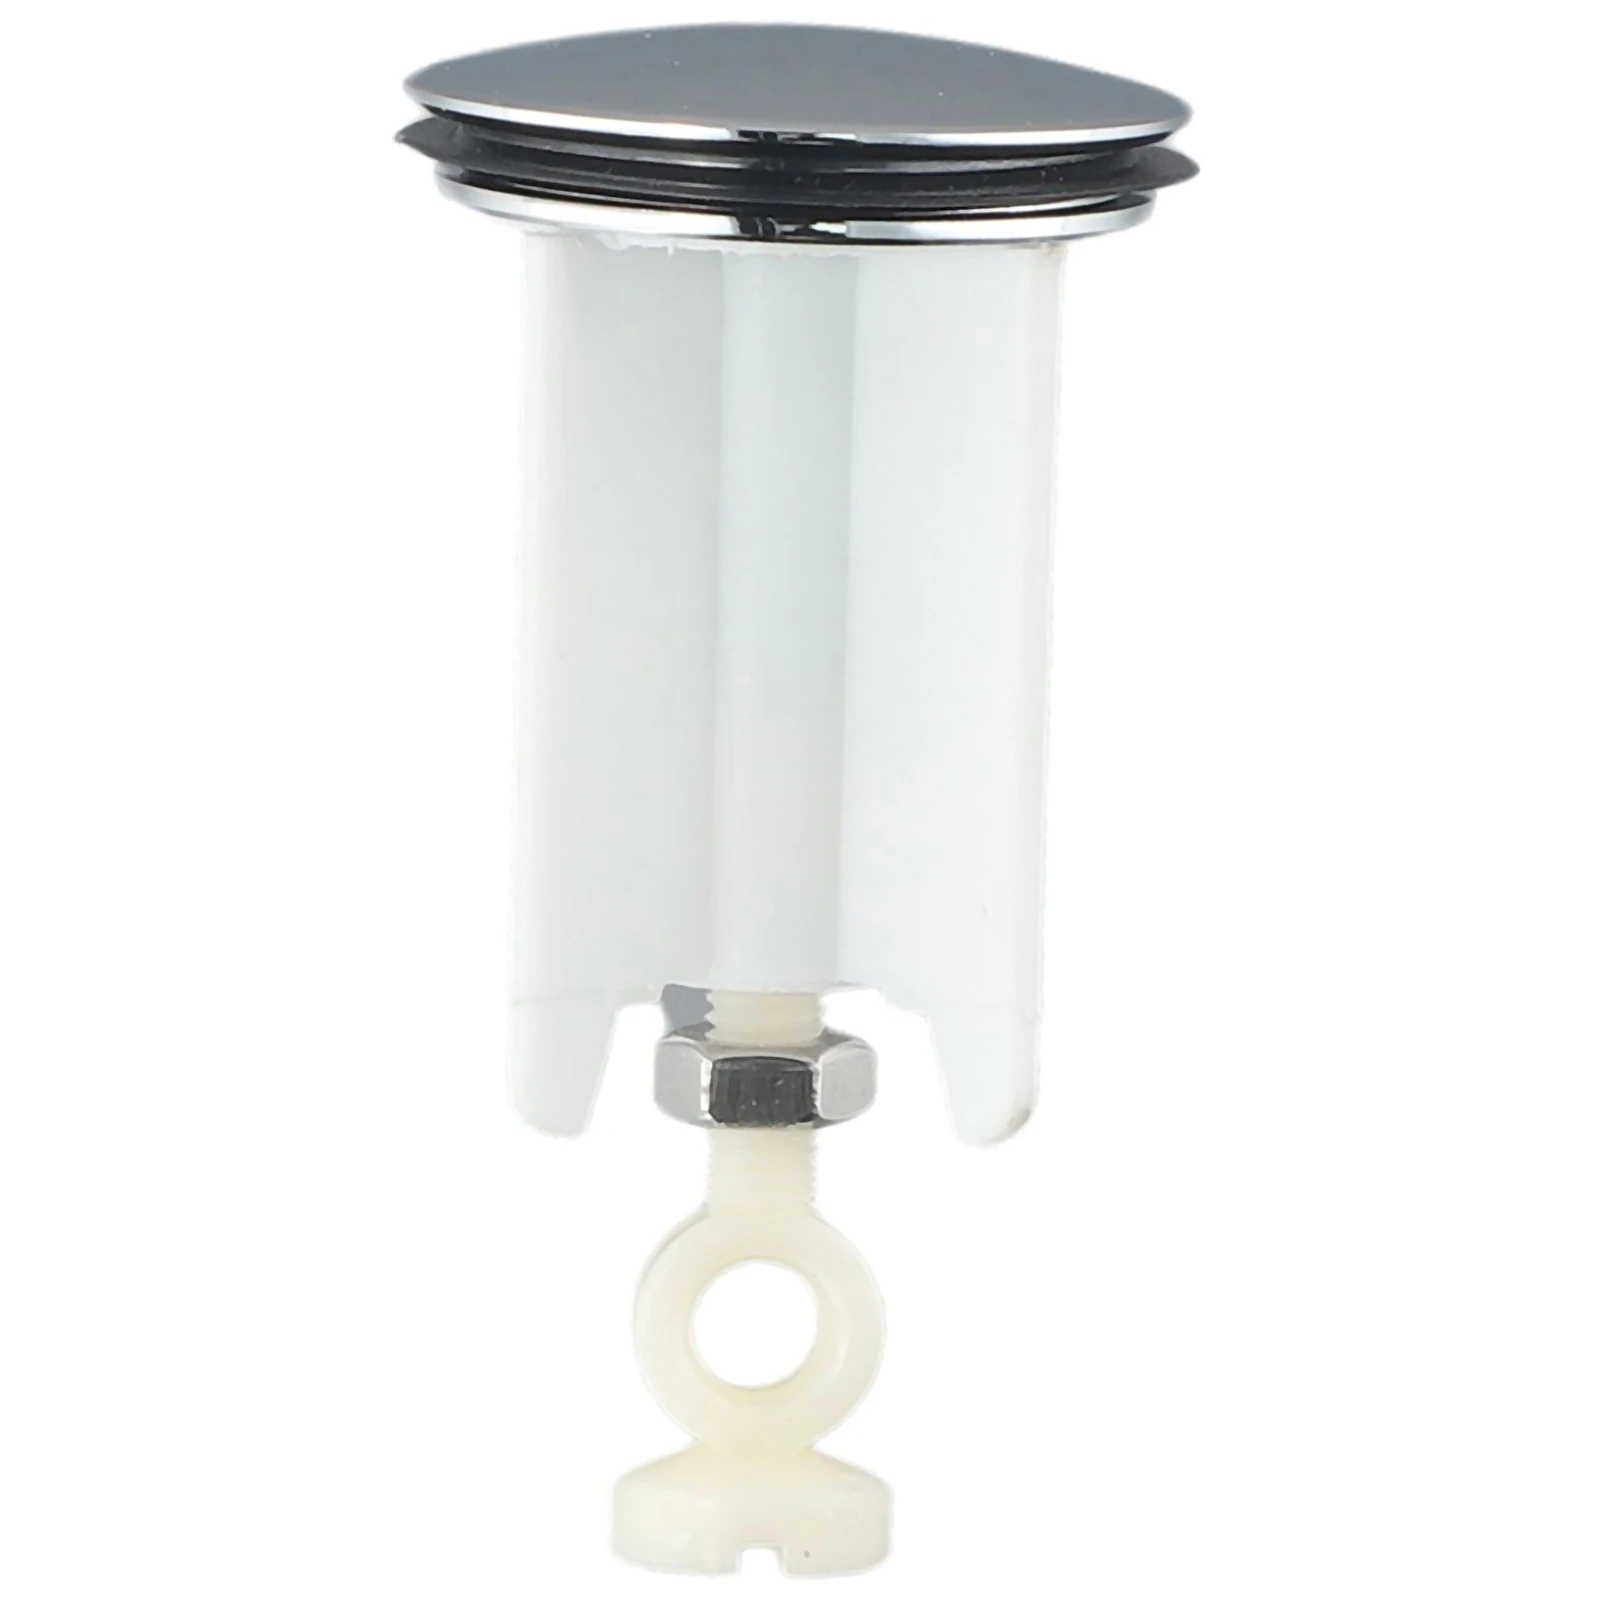 

Durable High Quality Wash Basin Plug Sink Plug Bathroom Copper Cover Diameter 4cm Drain Plug Fittings Pop-Up Plug Practical